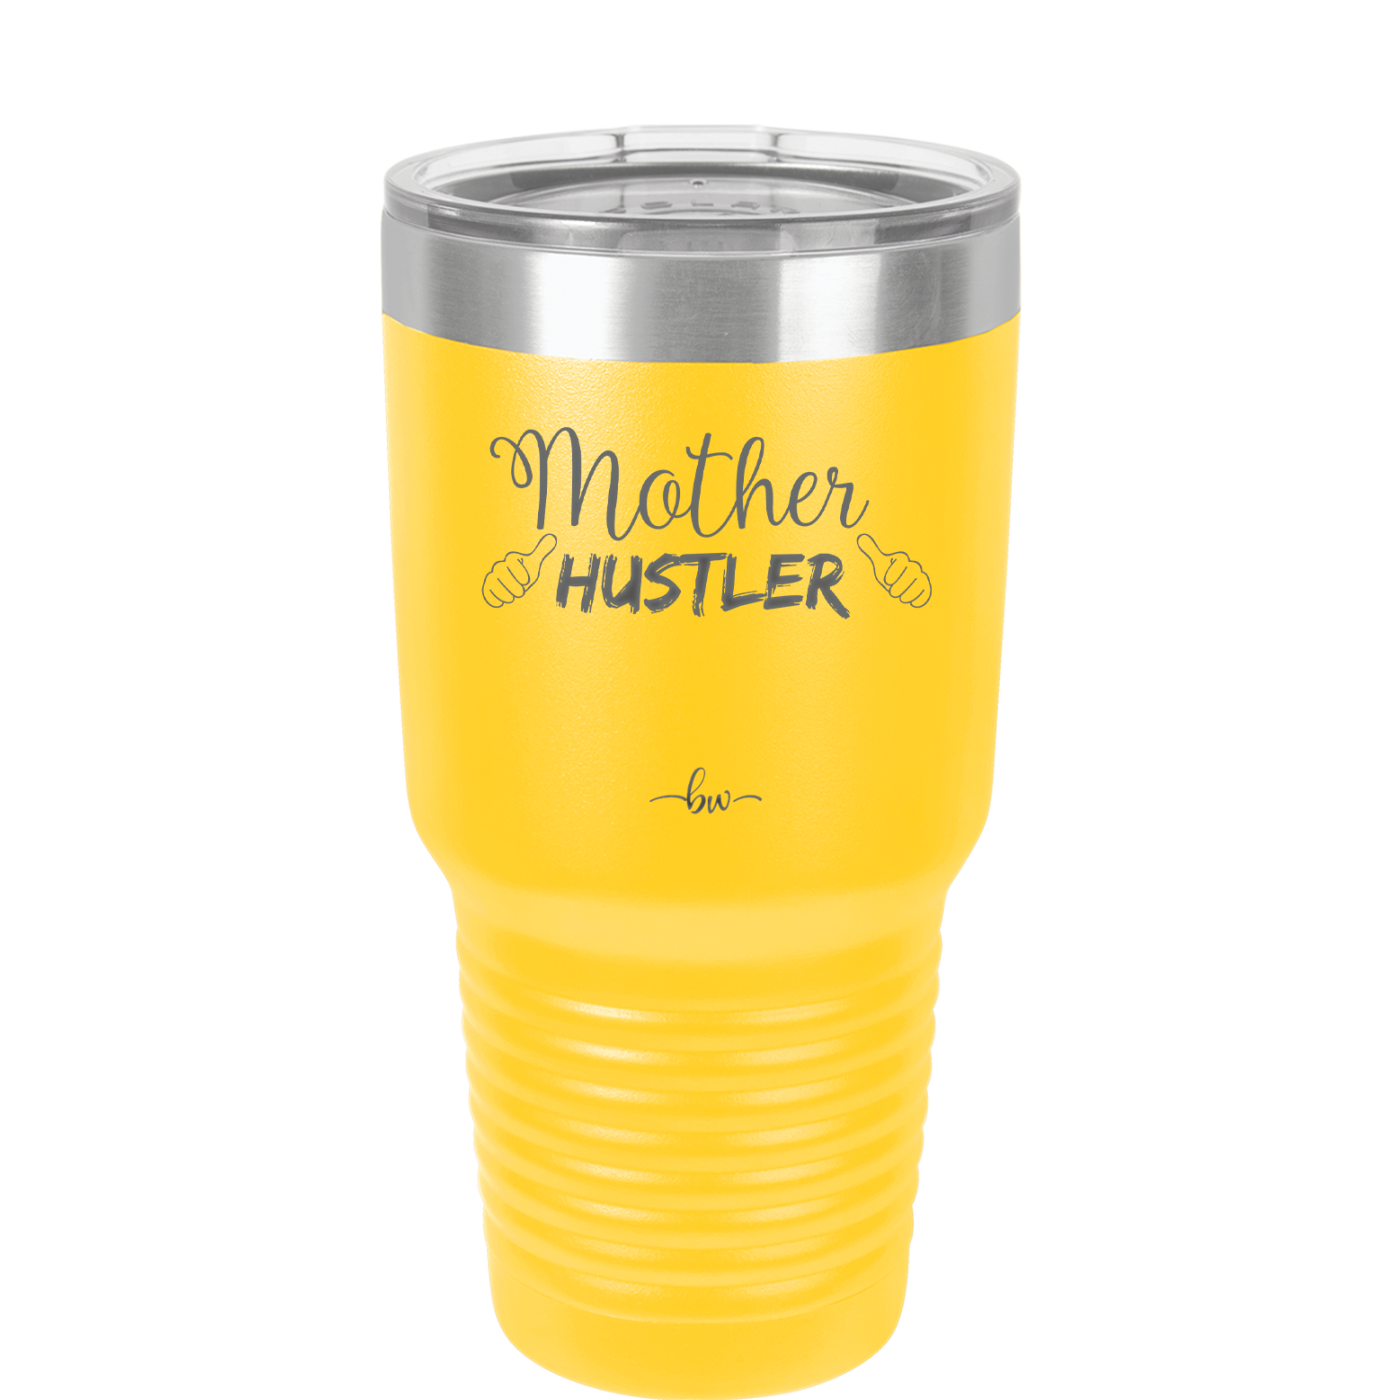 Mother Hustler - Laser Engraved Stainless Steel Drinkware - 1986 -